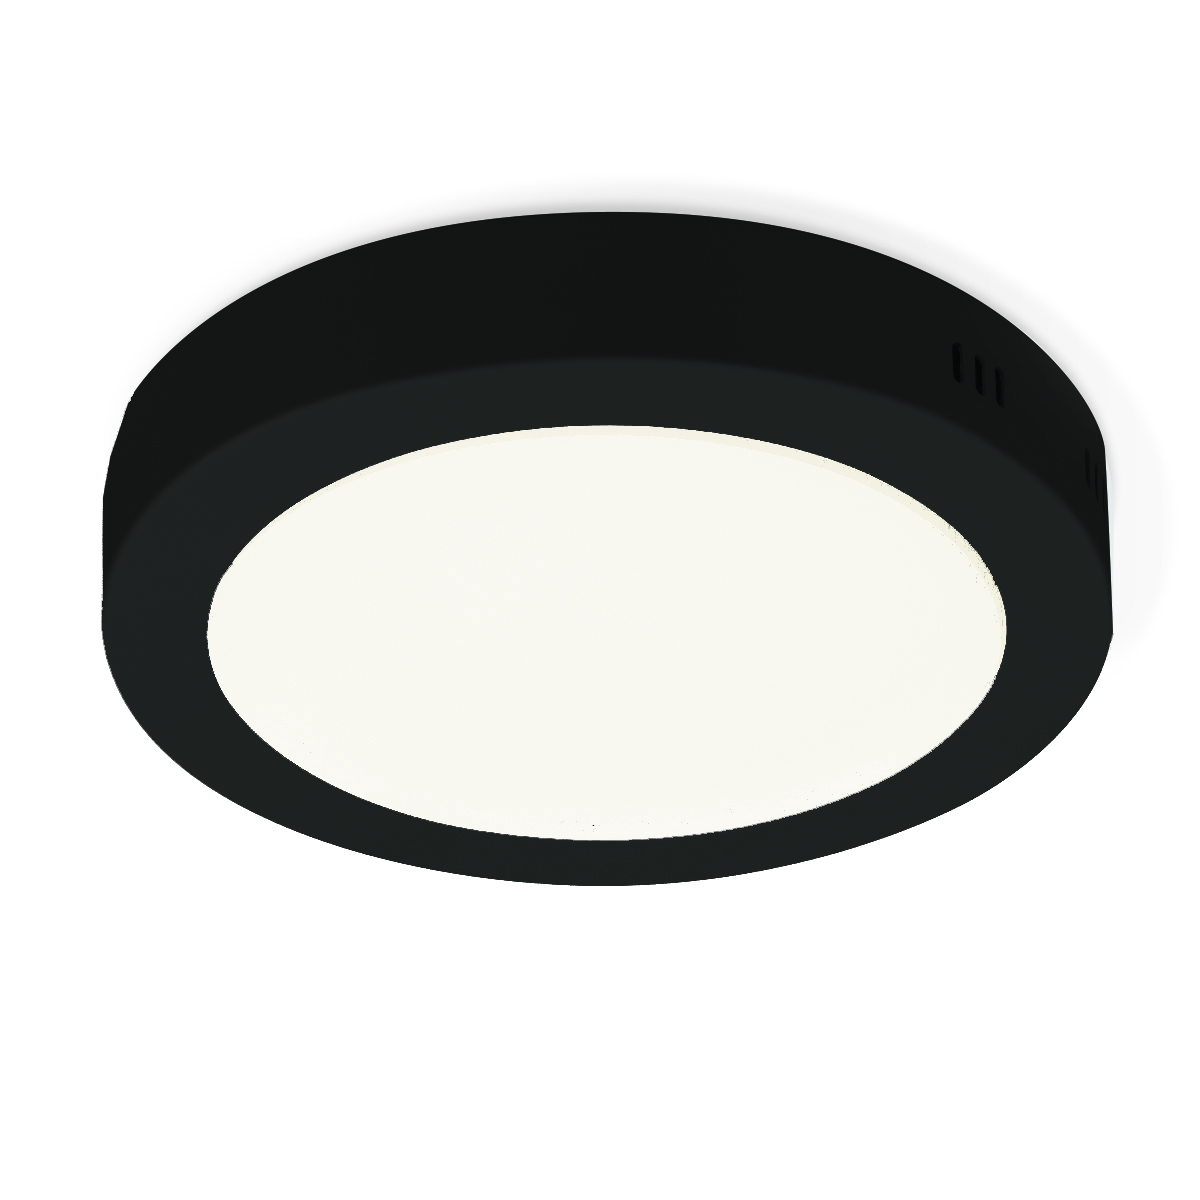 Tangla lighting - TLC5014-15SB - LED Ceiling lamp - metal - sand black - large - round - pie